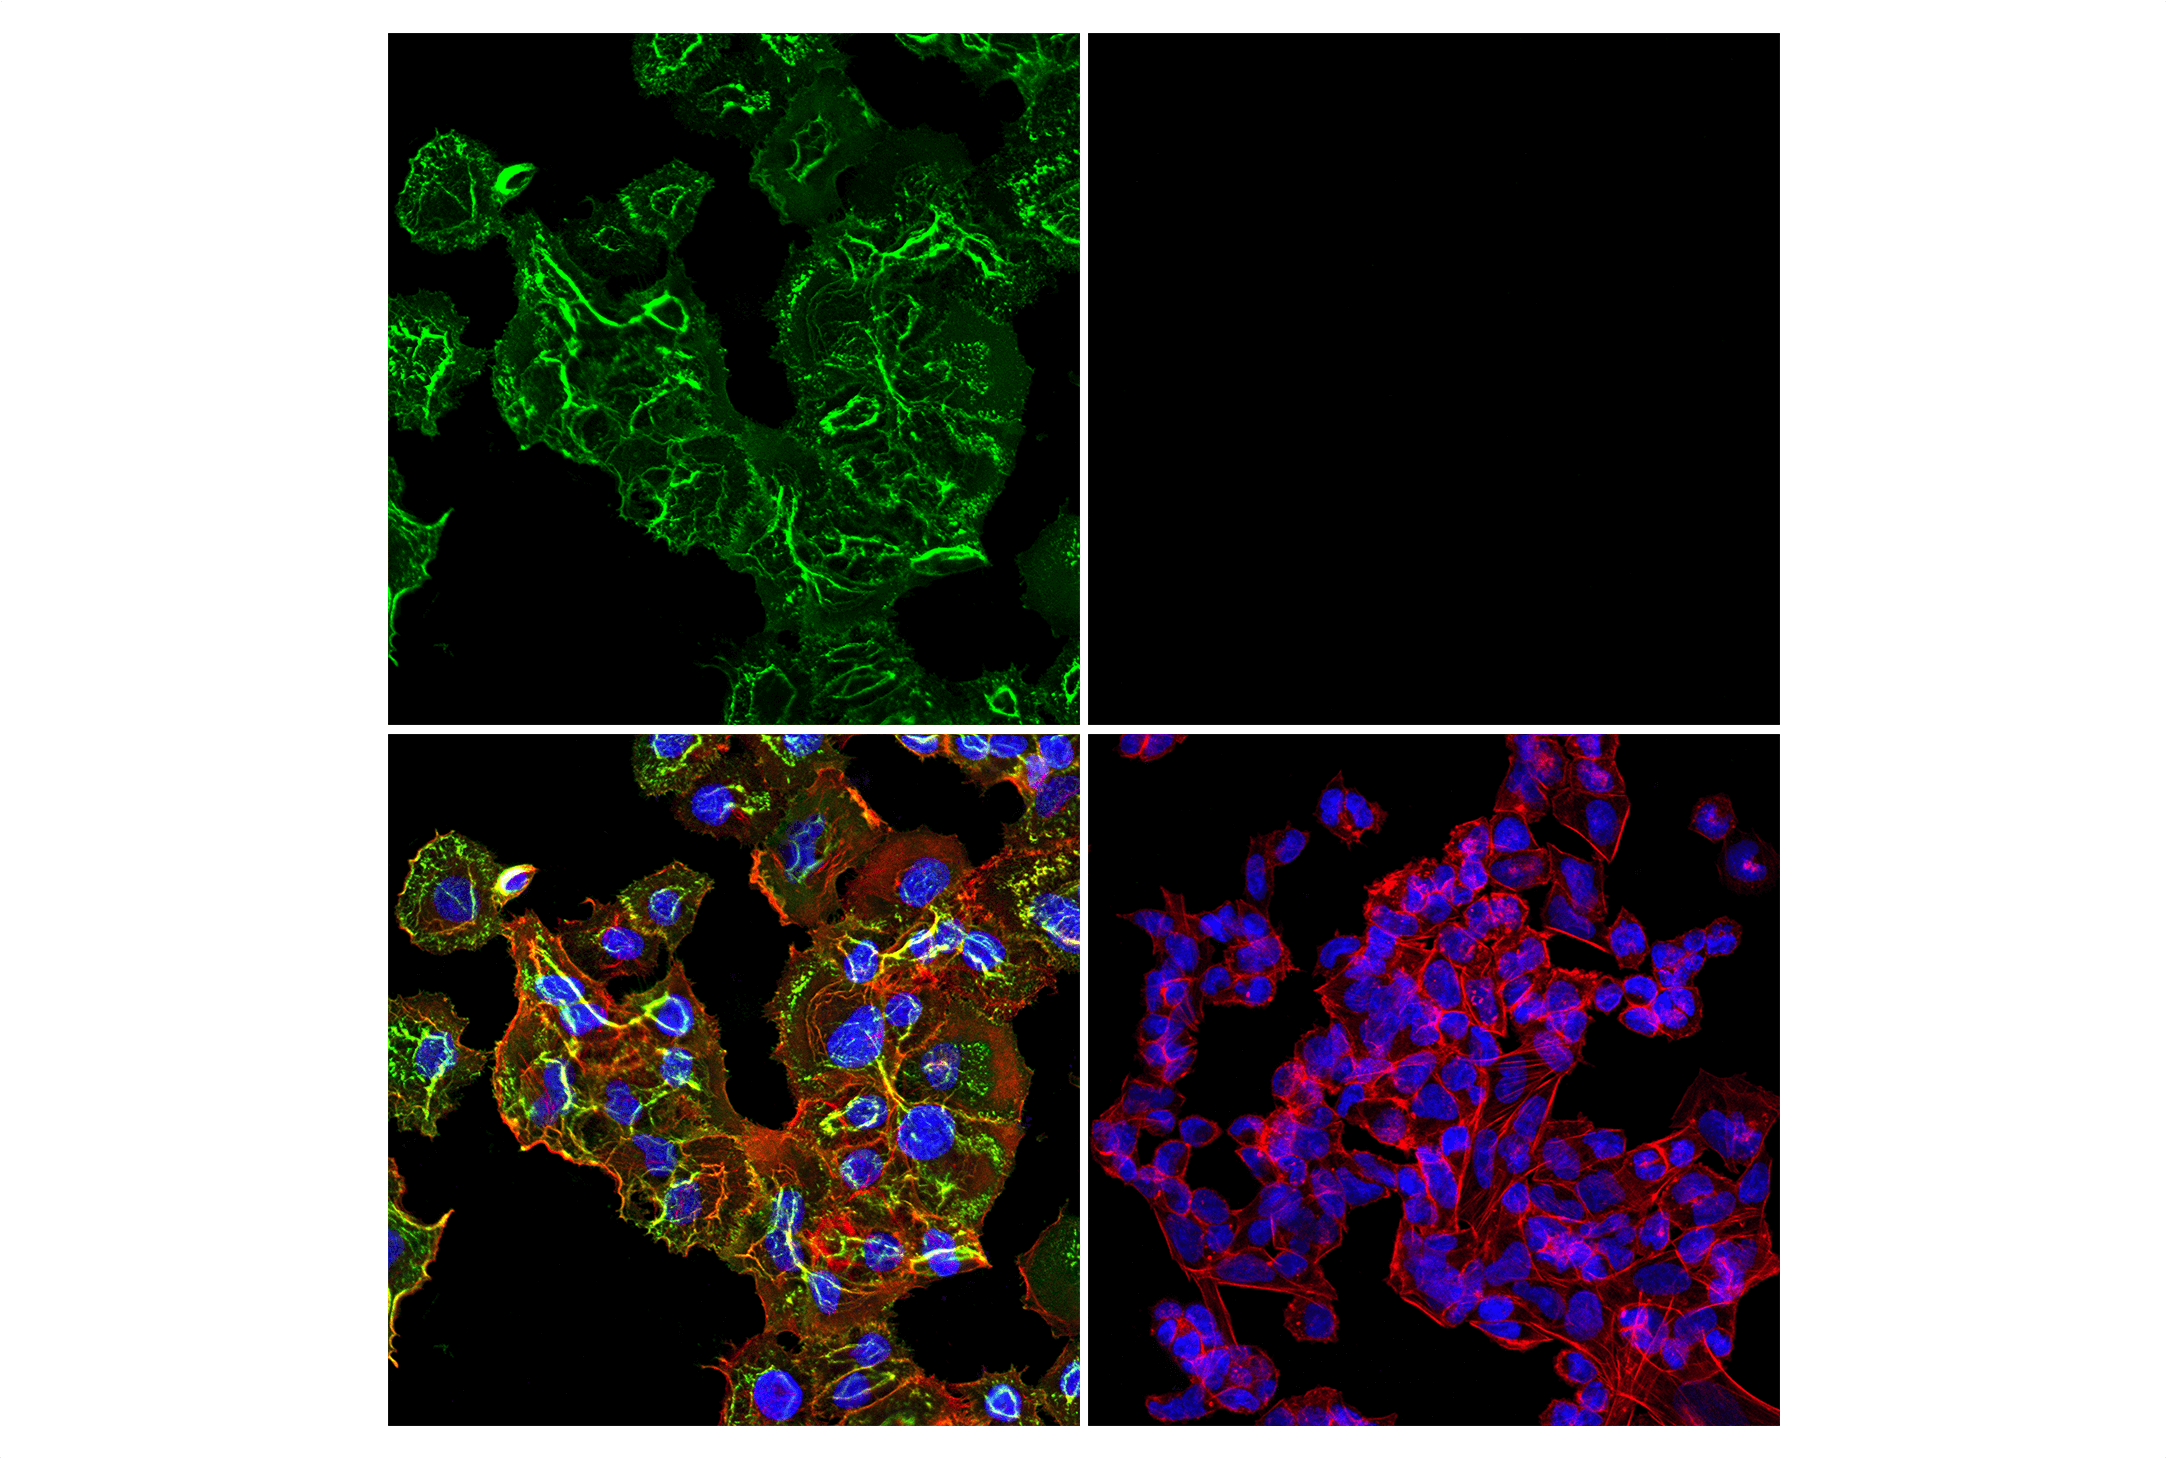  Image 33: Wnt/β-Catenin Activated Targets Antibody Sampler Kit